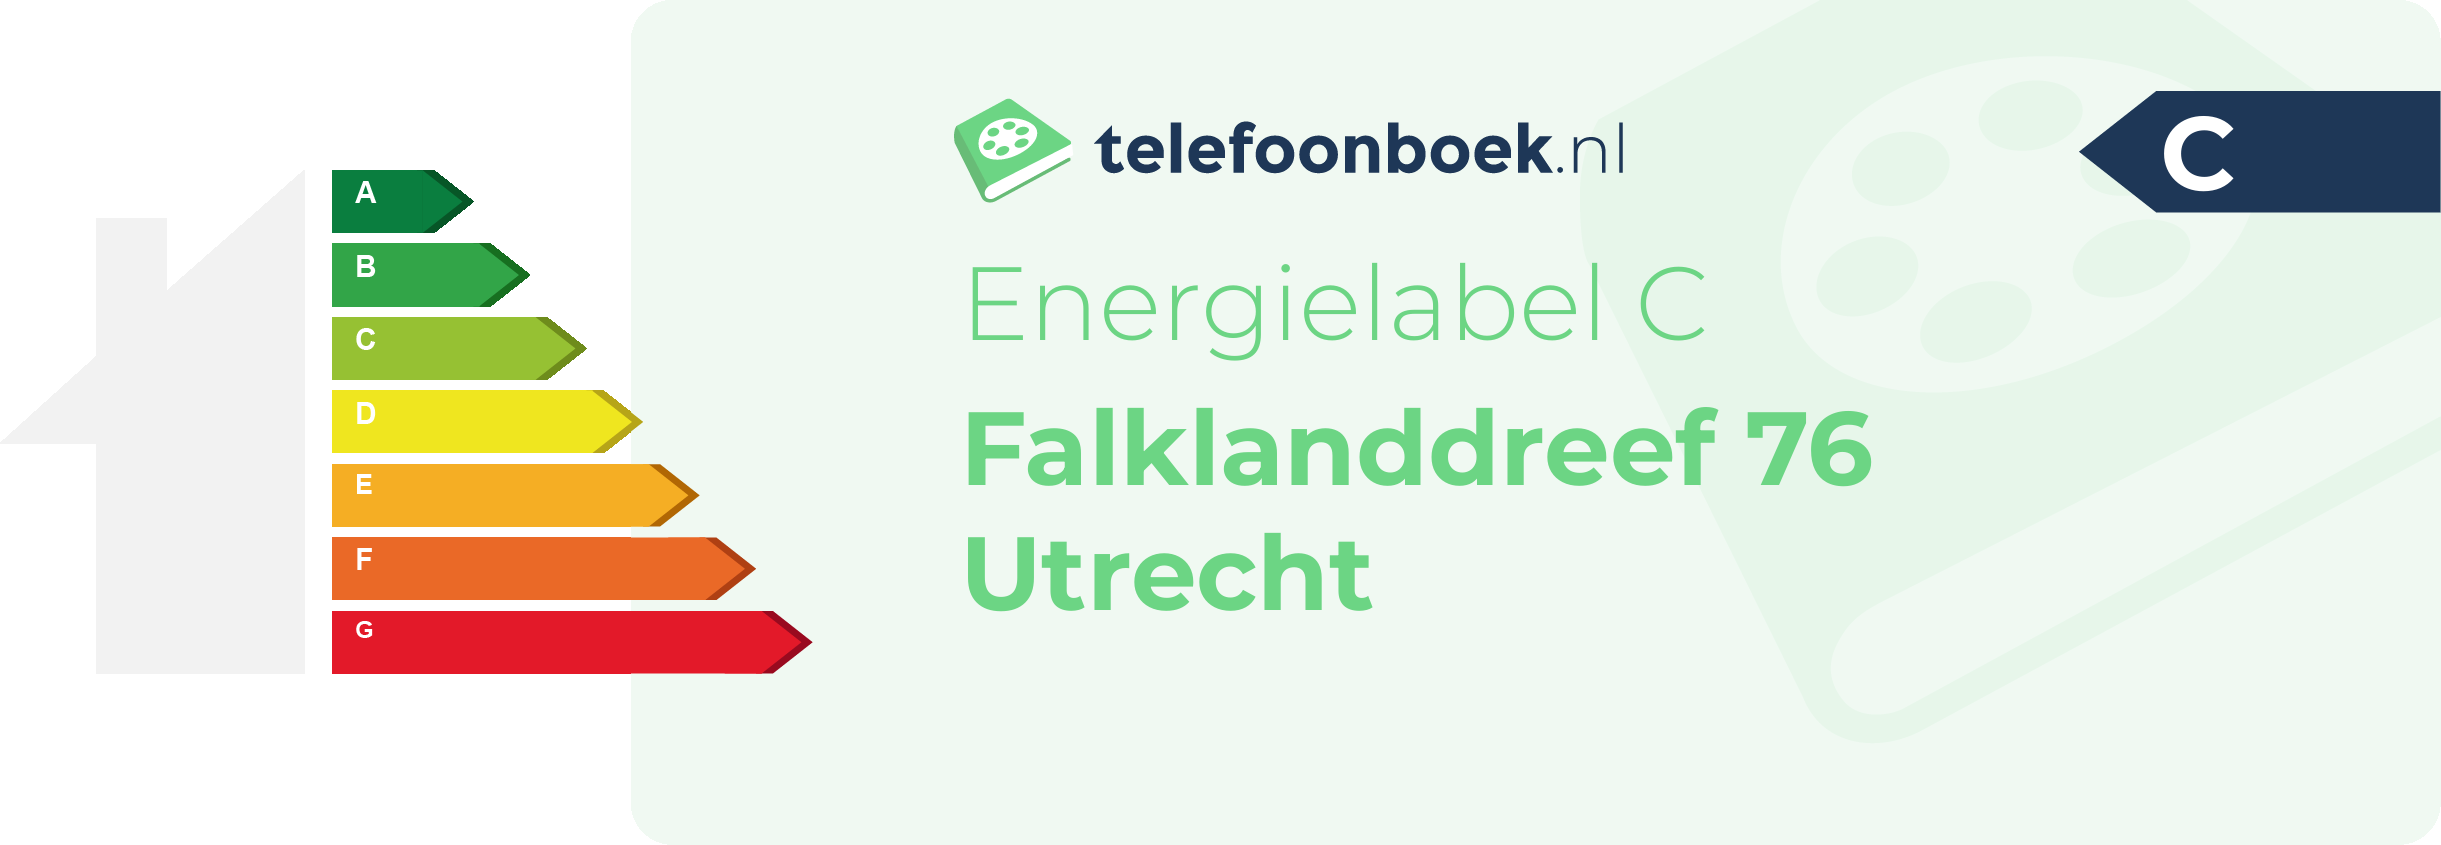 Energielabel Falklanddreef 76 Utrecht